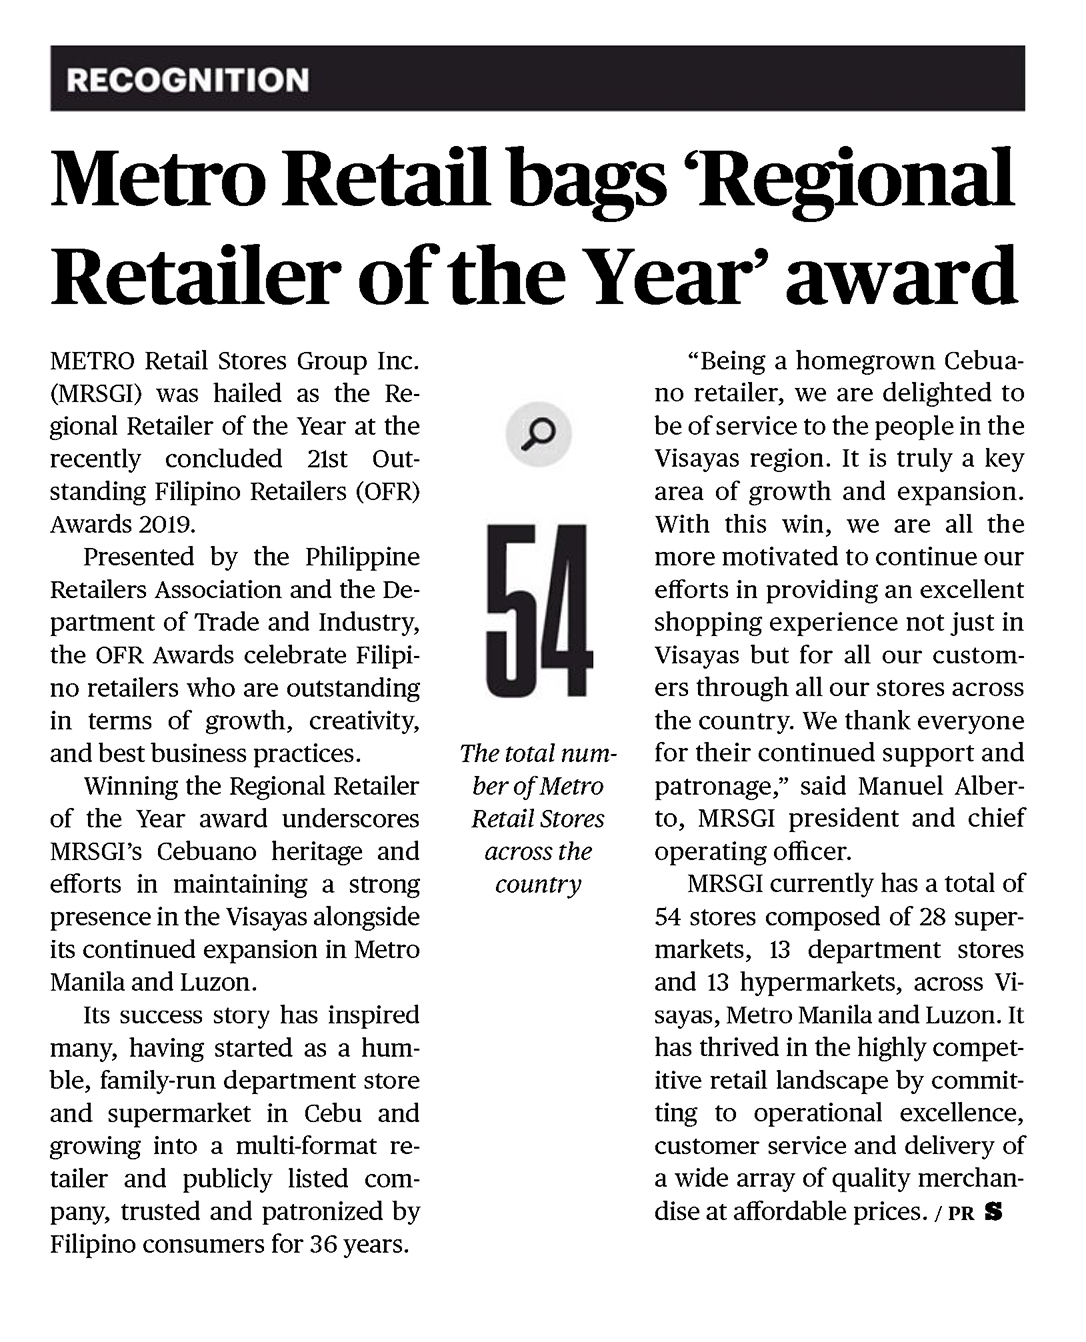 Metro Retail bags Regional Retailer of the Year award Sun Star Cebu